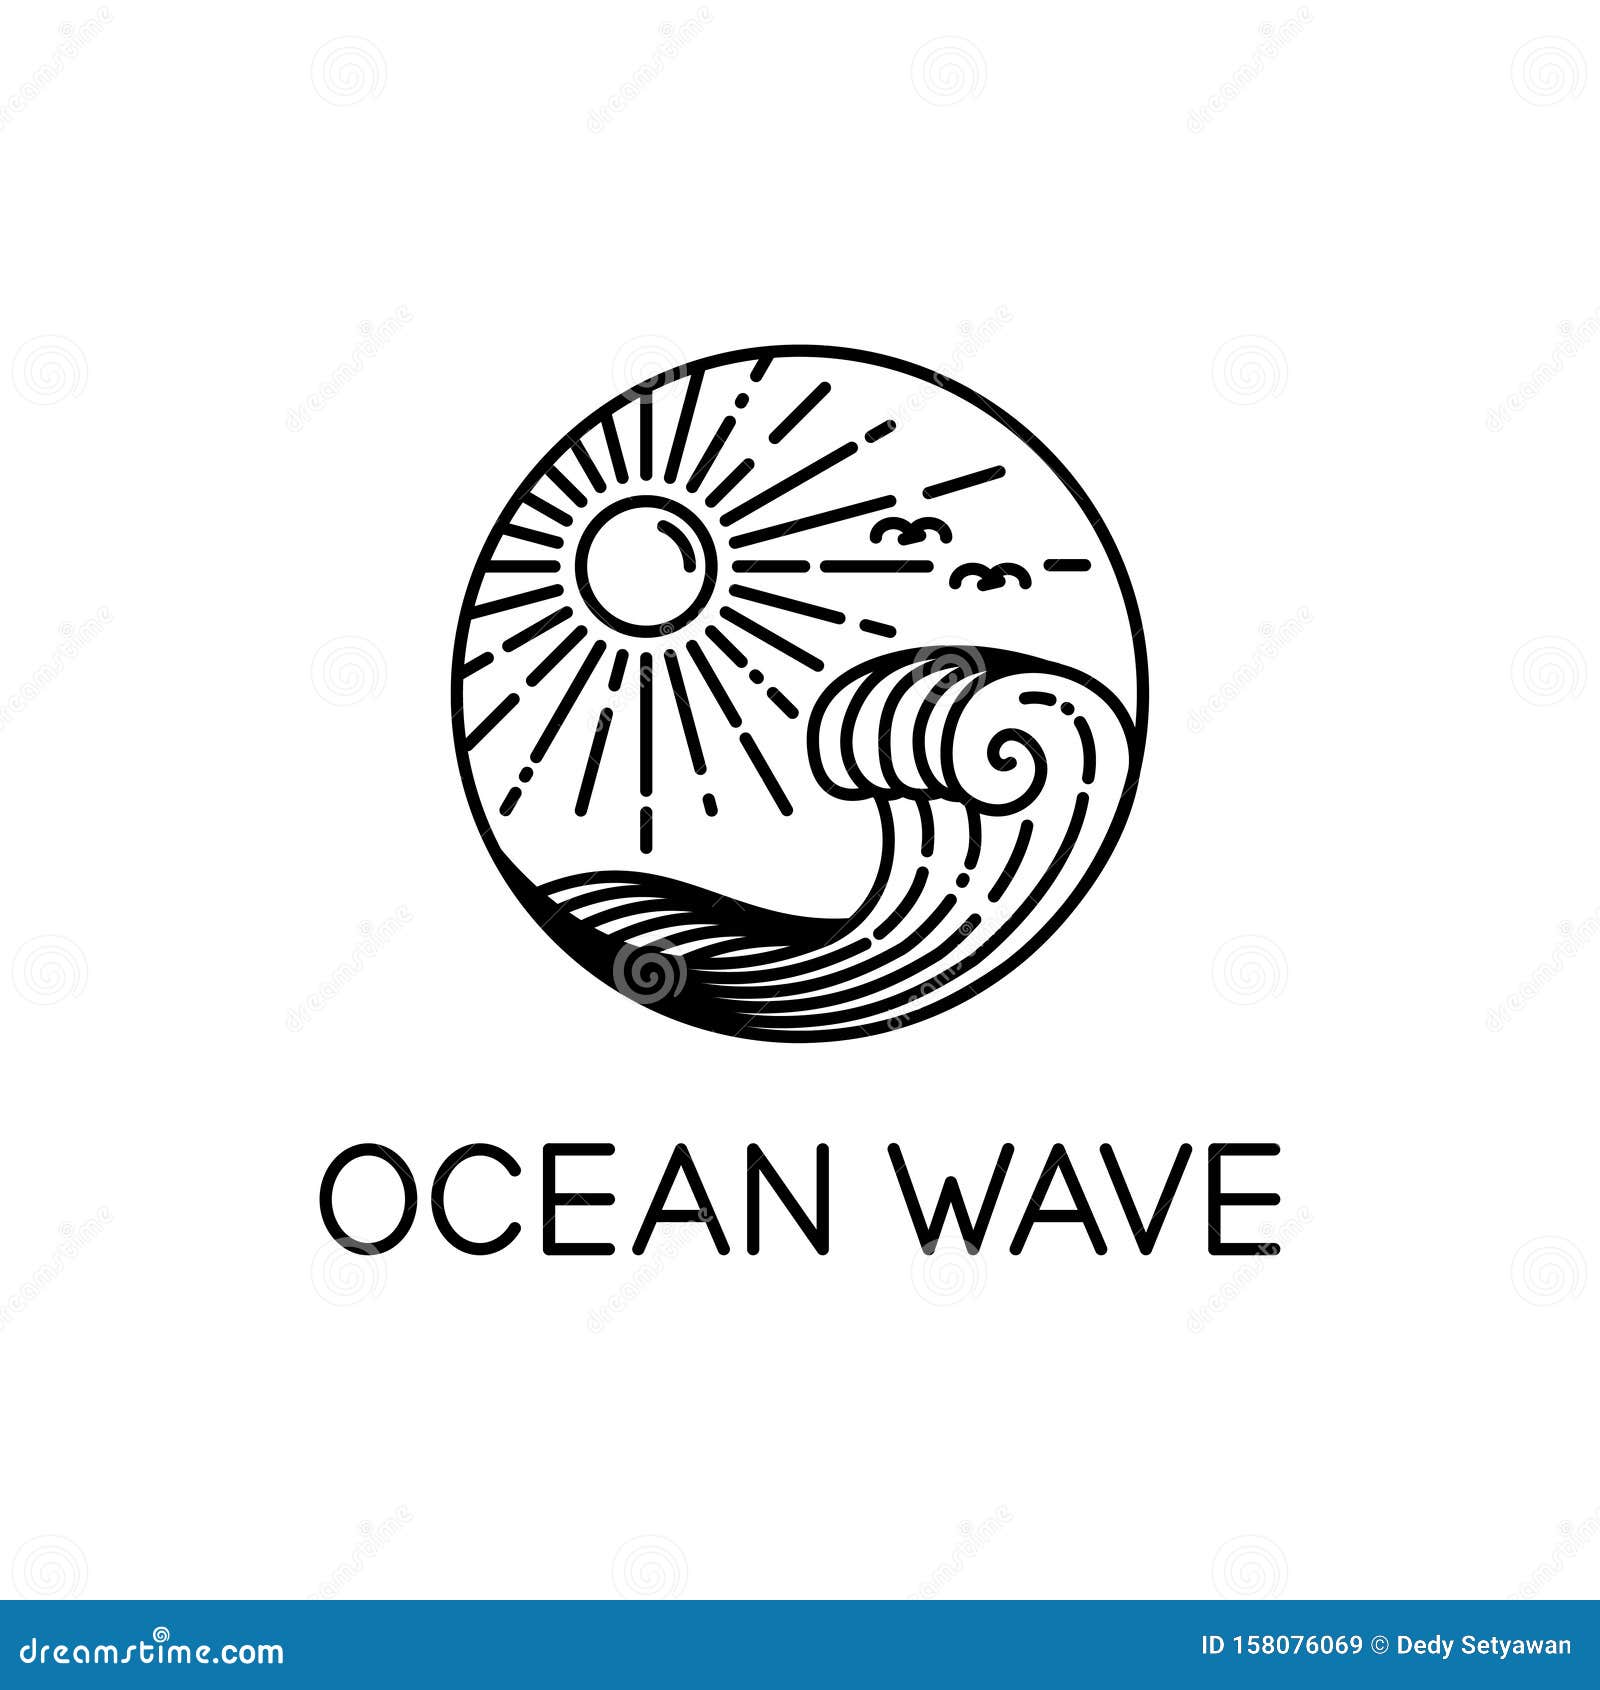 Ocean waves line art stock vector. Illustration of graphic